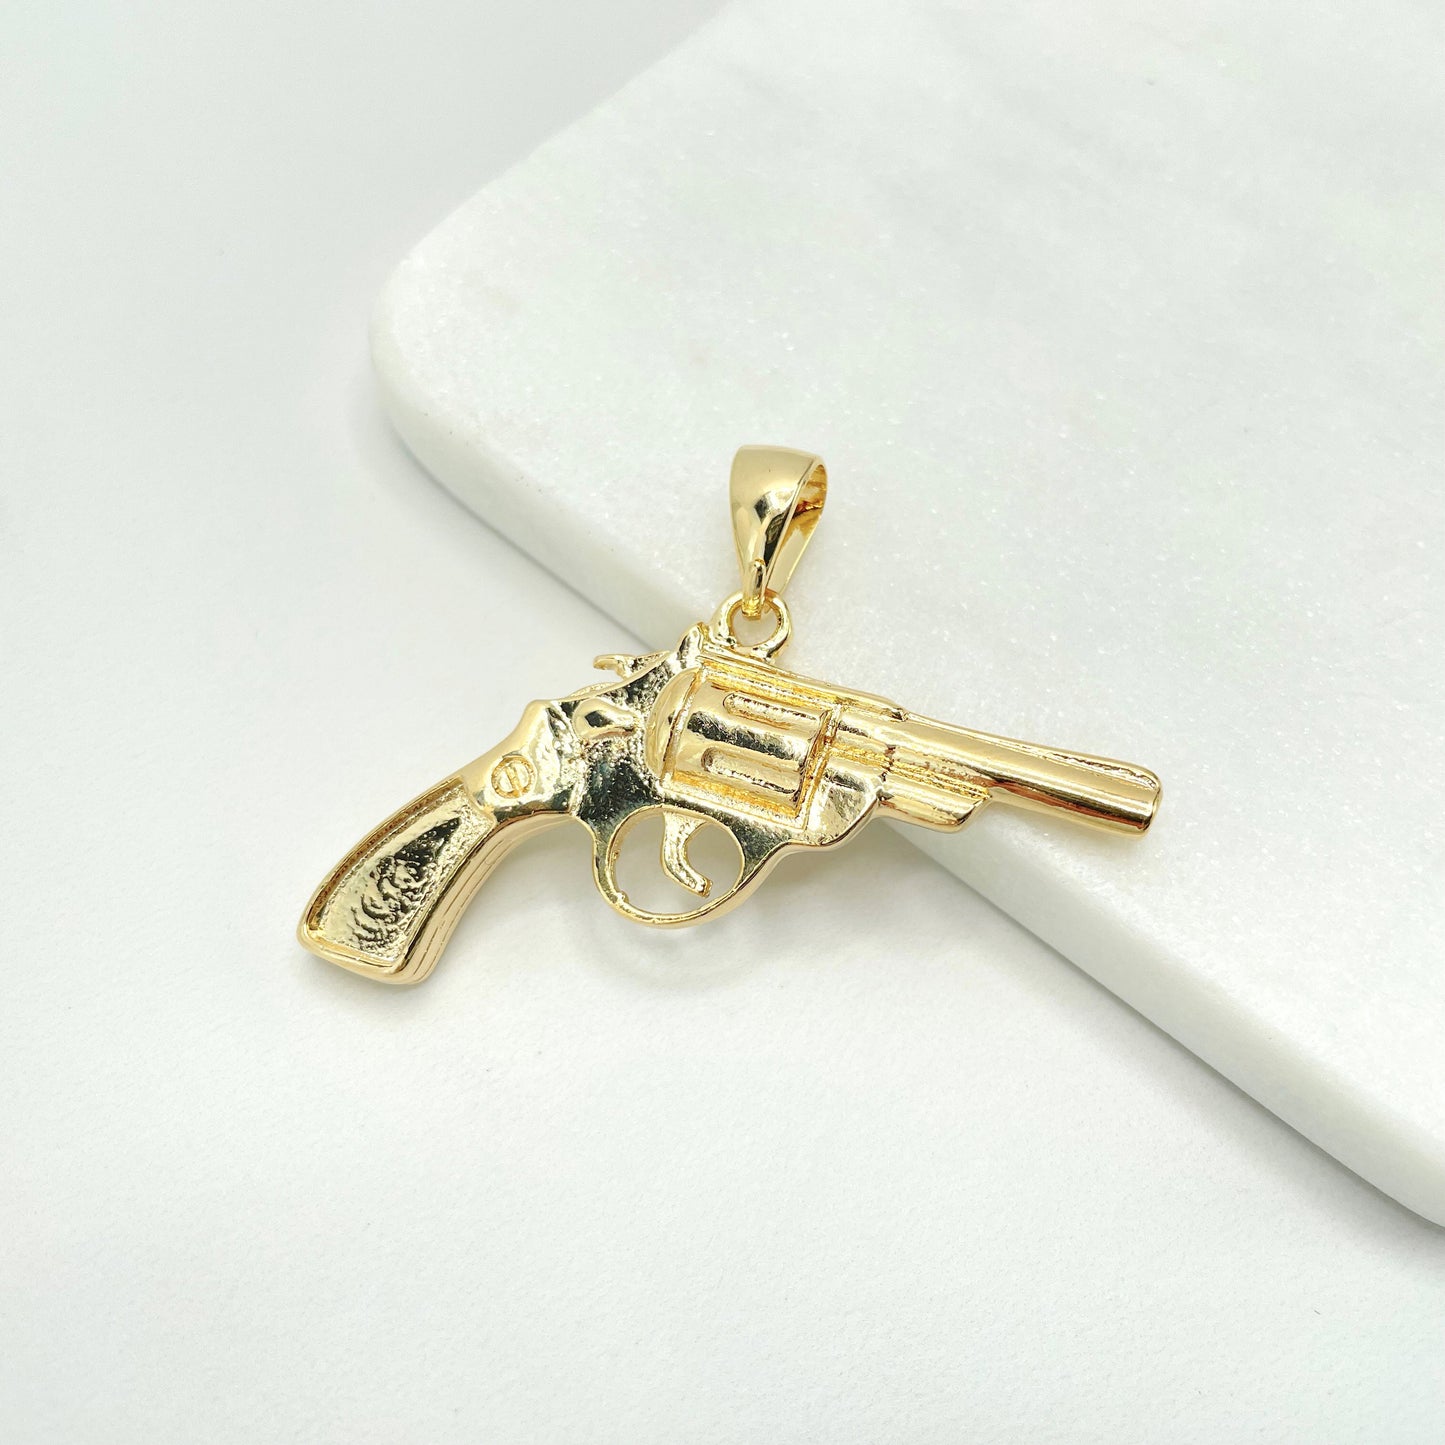 18k Gold Filled Revolver Pistol Gun 3D Pendant Charms, Fire Gun Shape, Men's Jewelry, Wholesale Jewelry Making Supplies